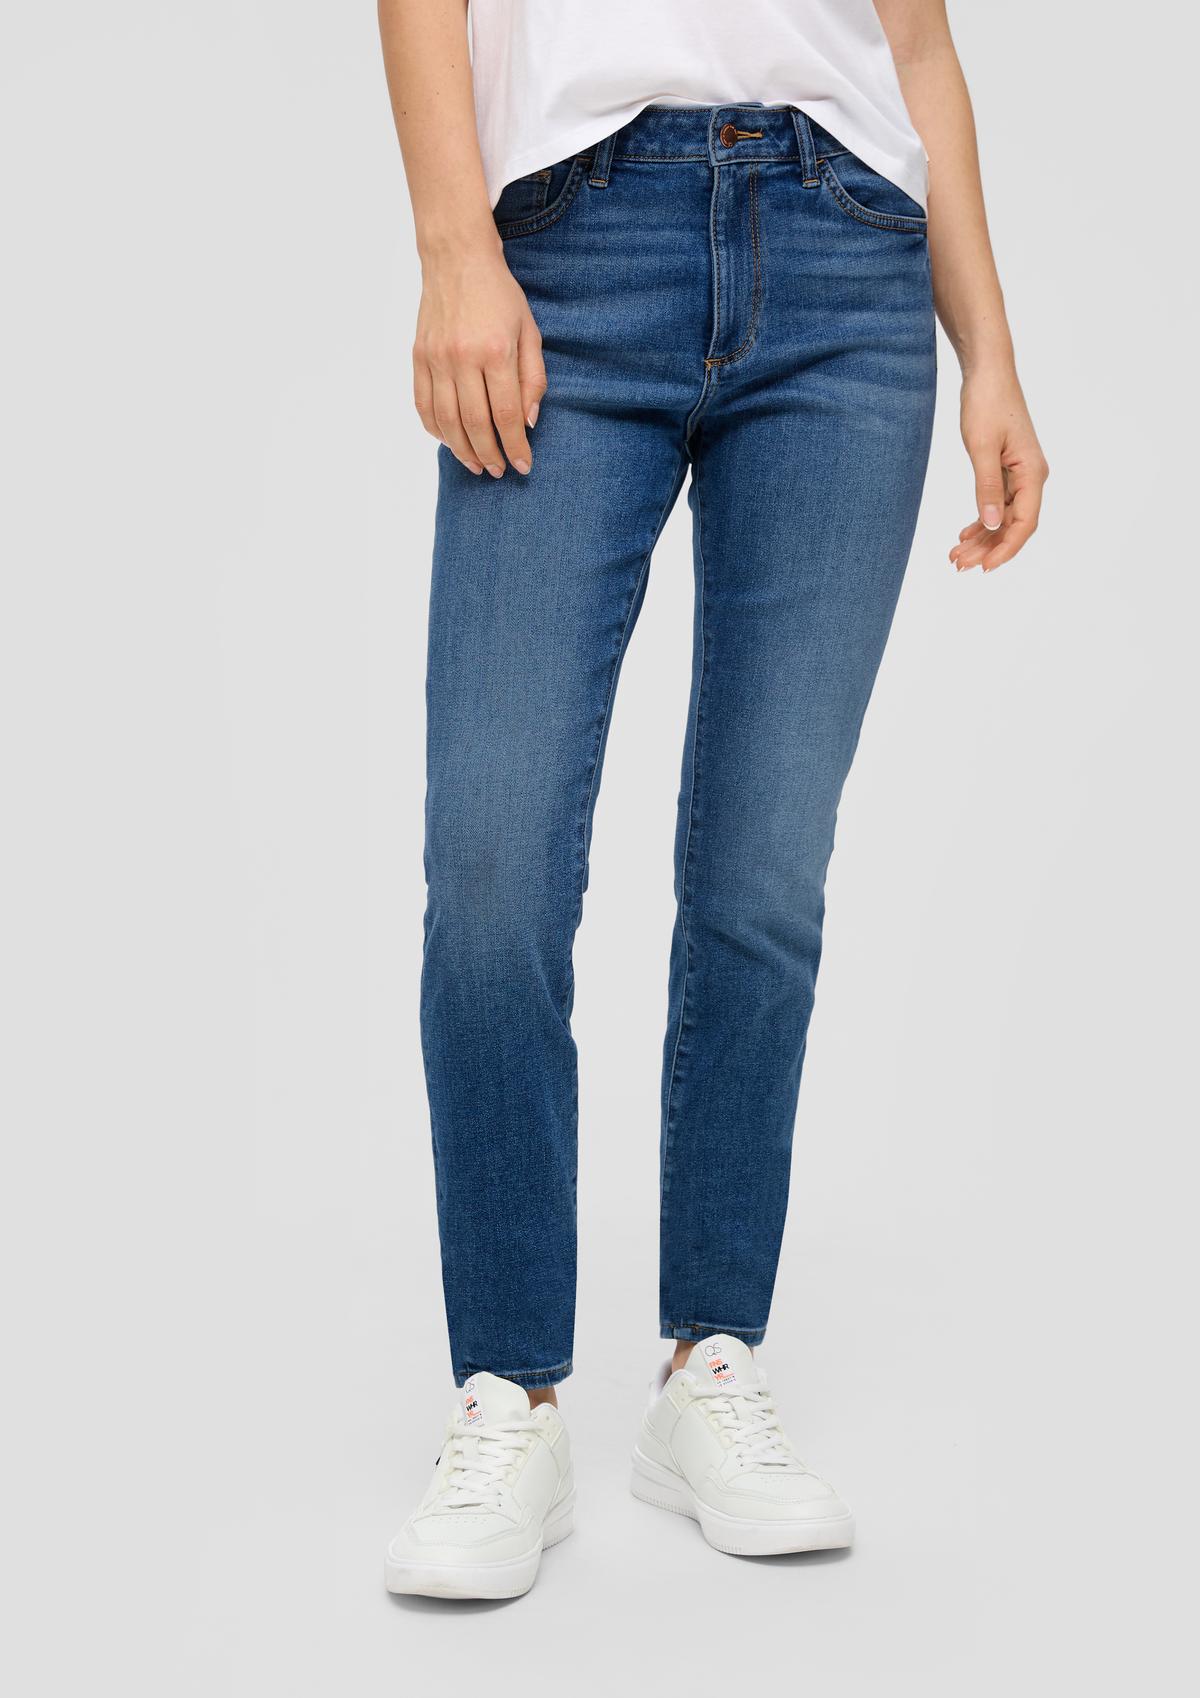 s.Oliver Jeans / super skinny fit / high rise / skinny leg